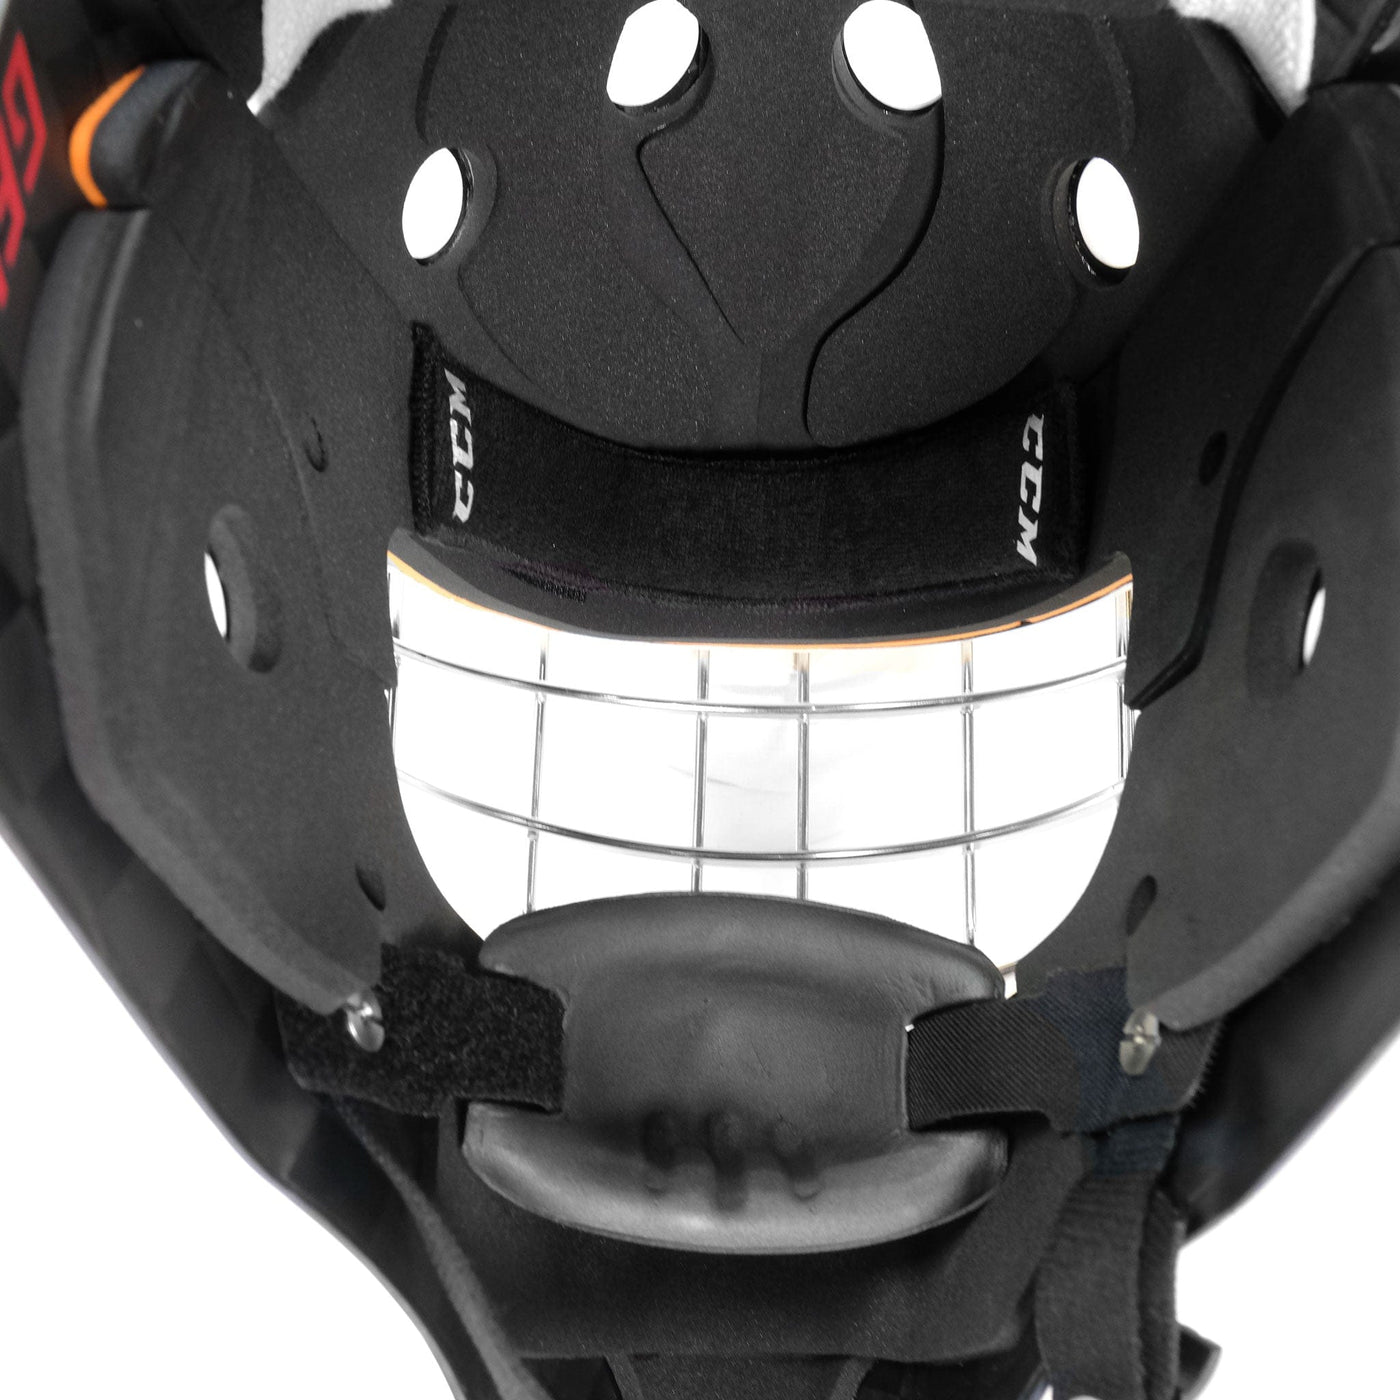 CCM Pro Senior Goalie Mask - The Hockey Shop Source For Sports